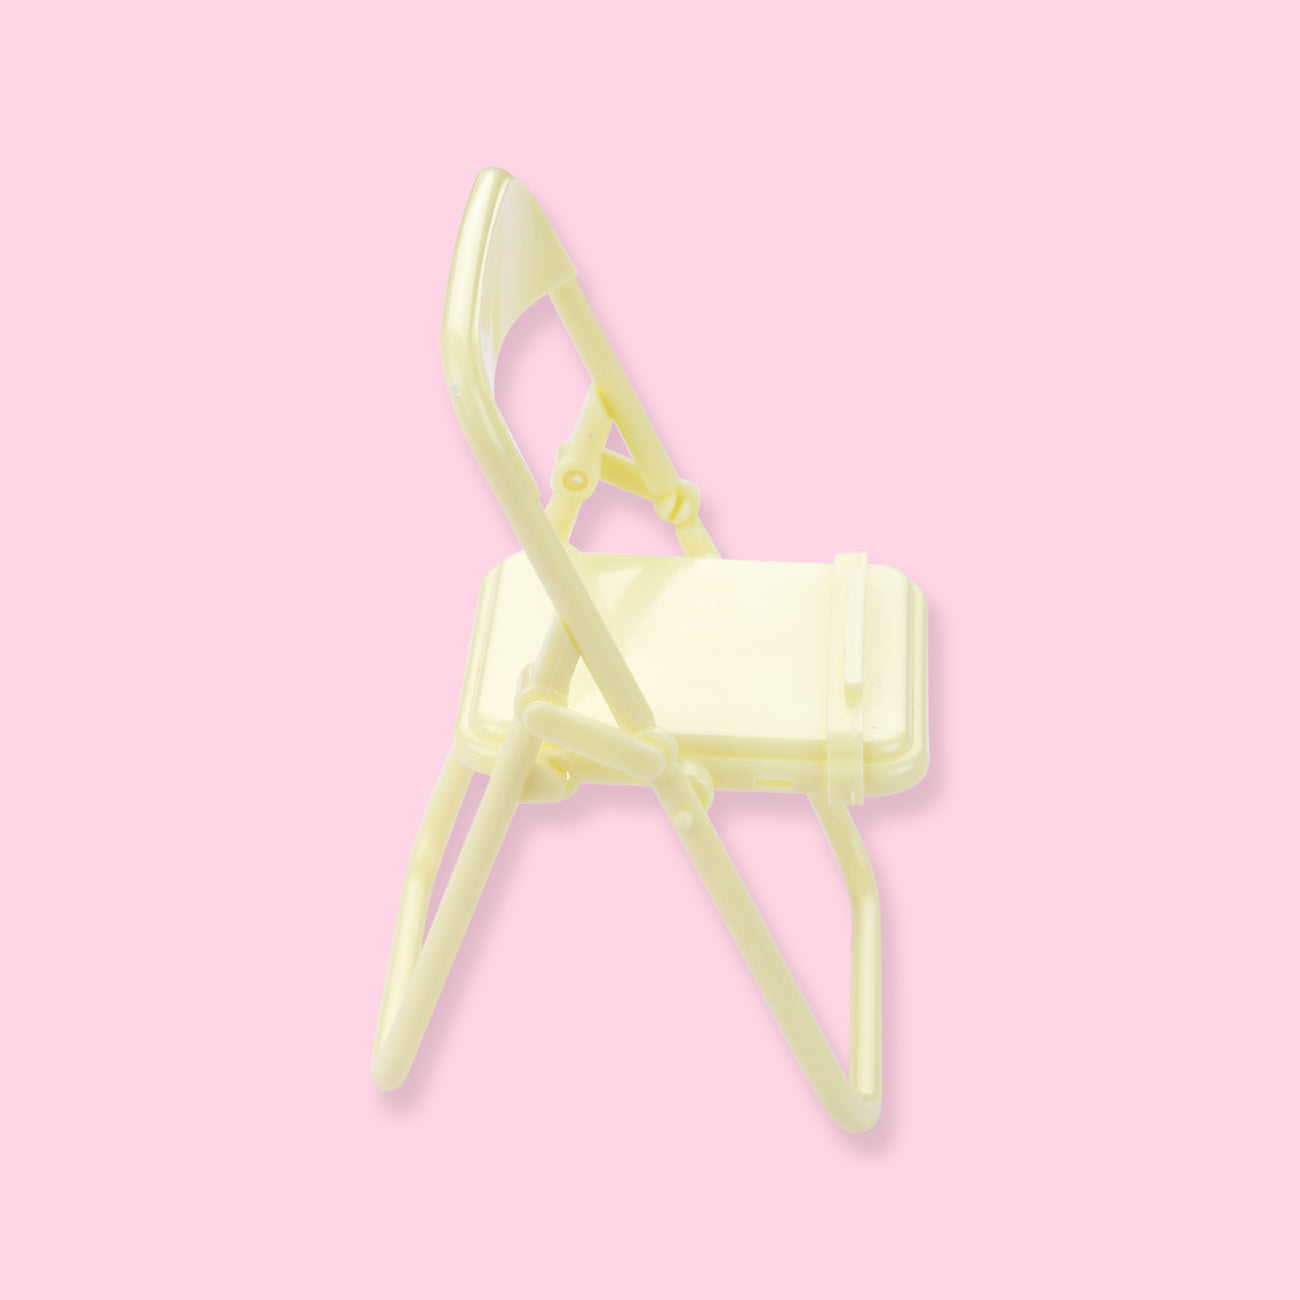 Foldable Chair Phone Holder - Creamy Yellow